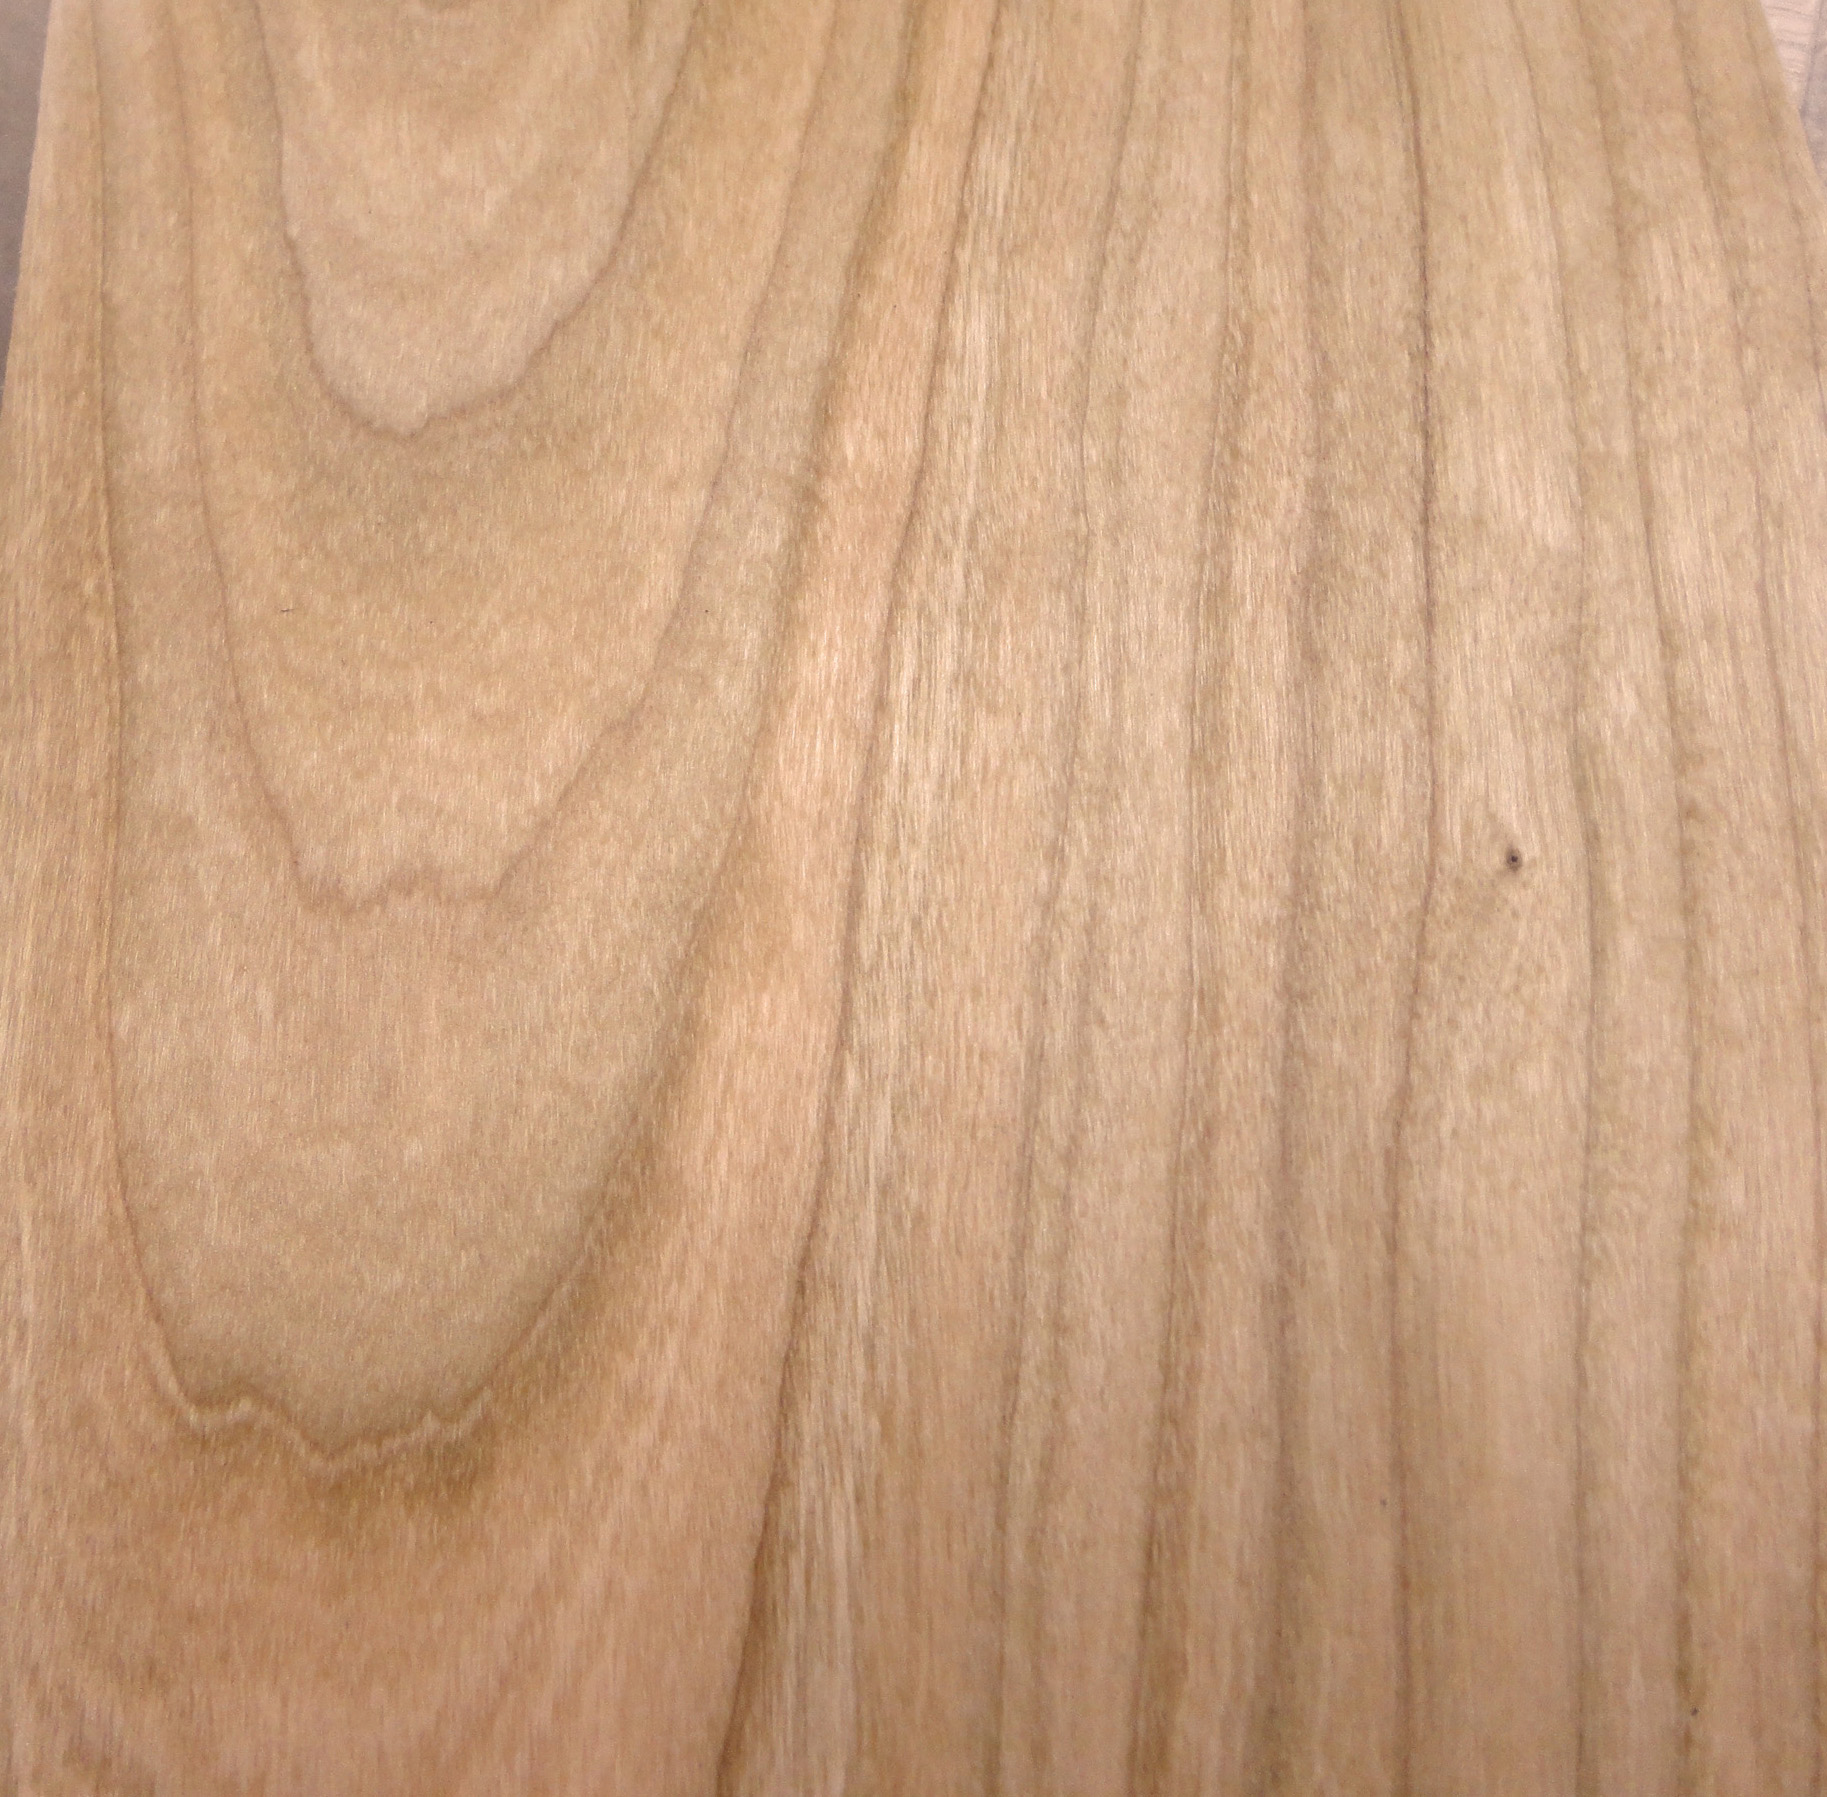 Details about   Cherry Quarter wood veneer sheet 25" x 8" on wood backer 1/25" thick A grade 